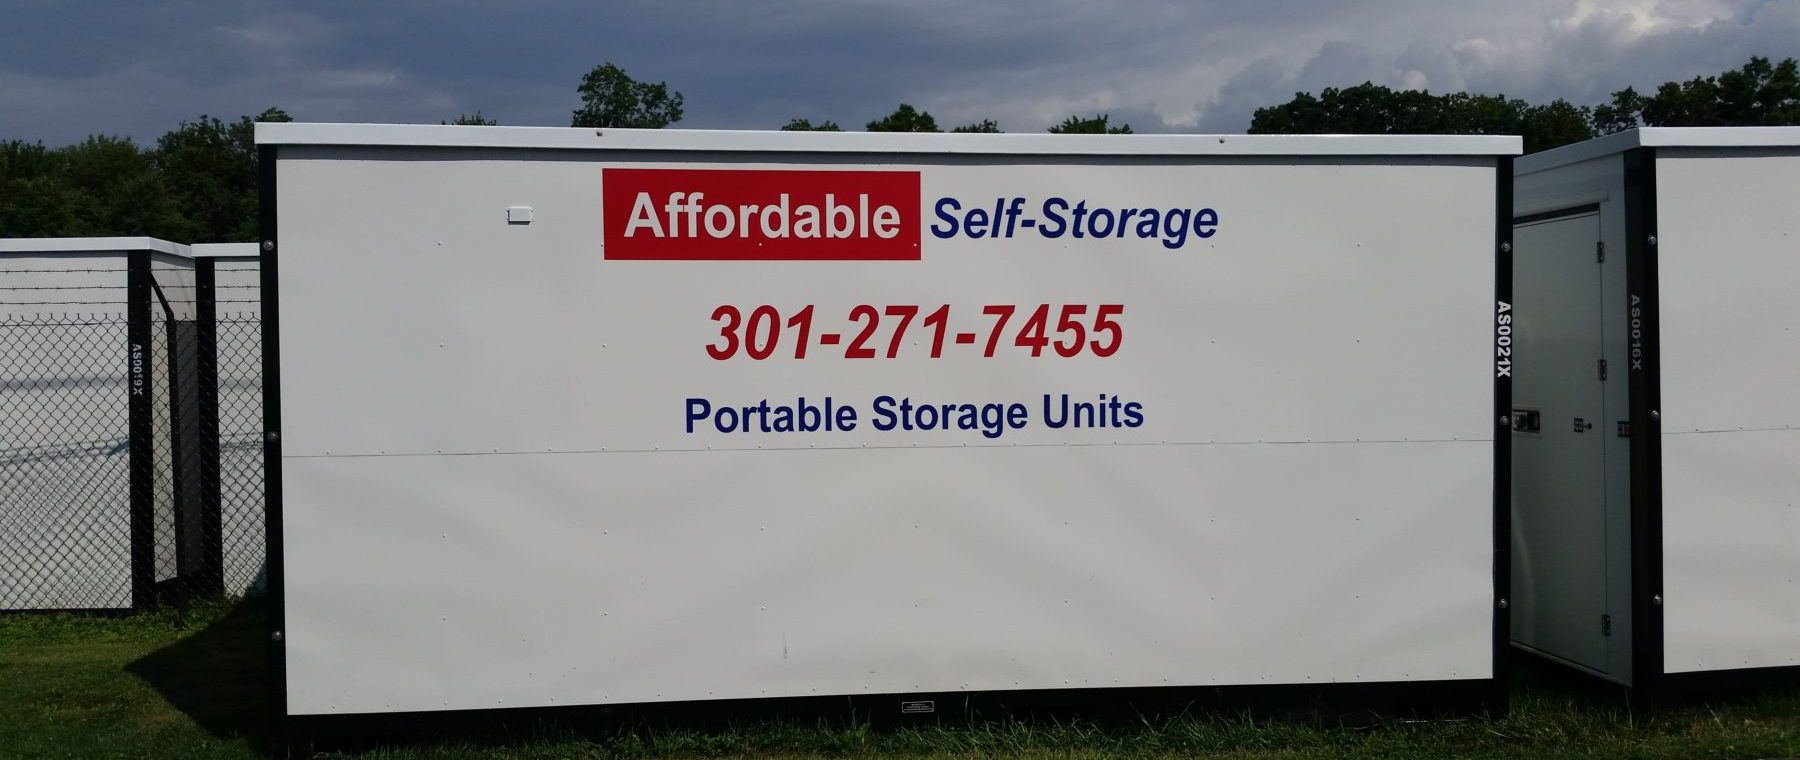 Brattleboro Portable Storage: Storage Units, Self Storage & Office Trailers